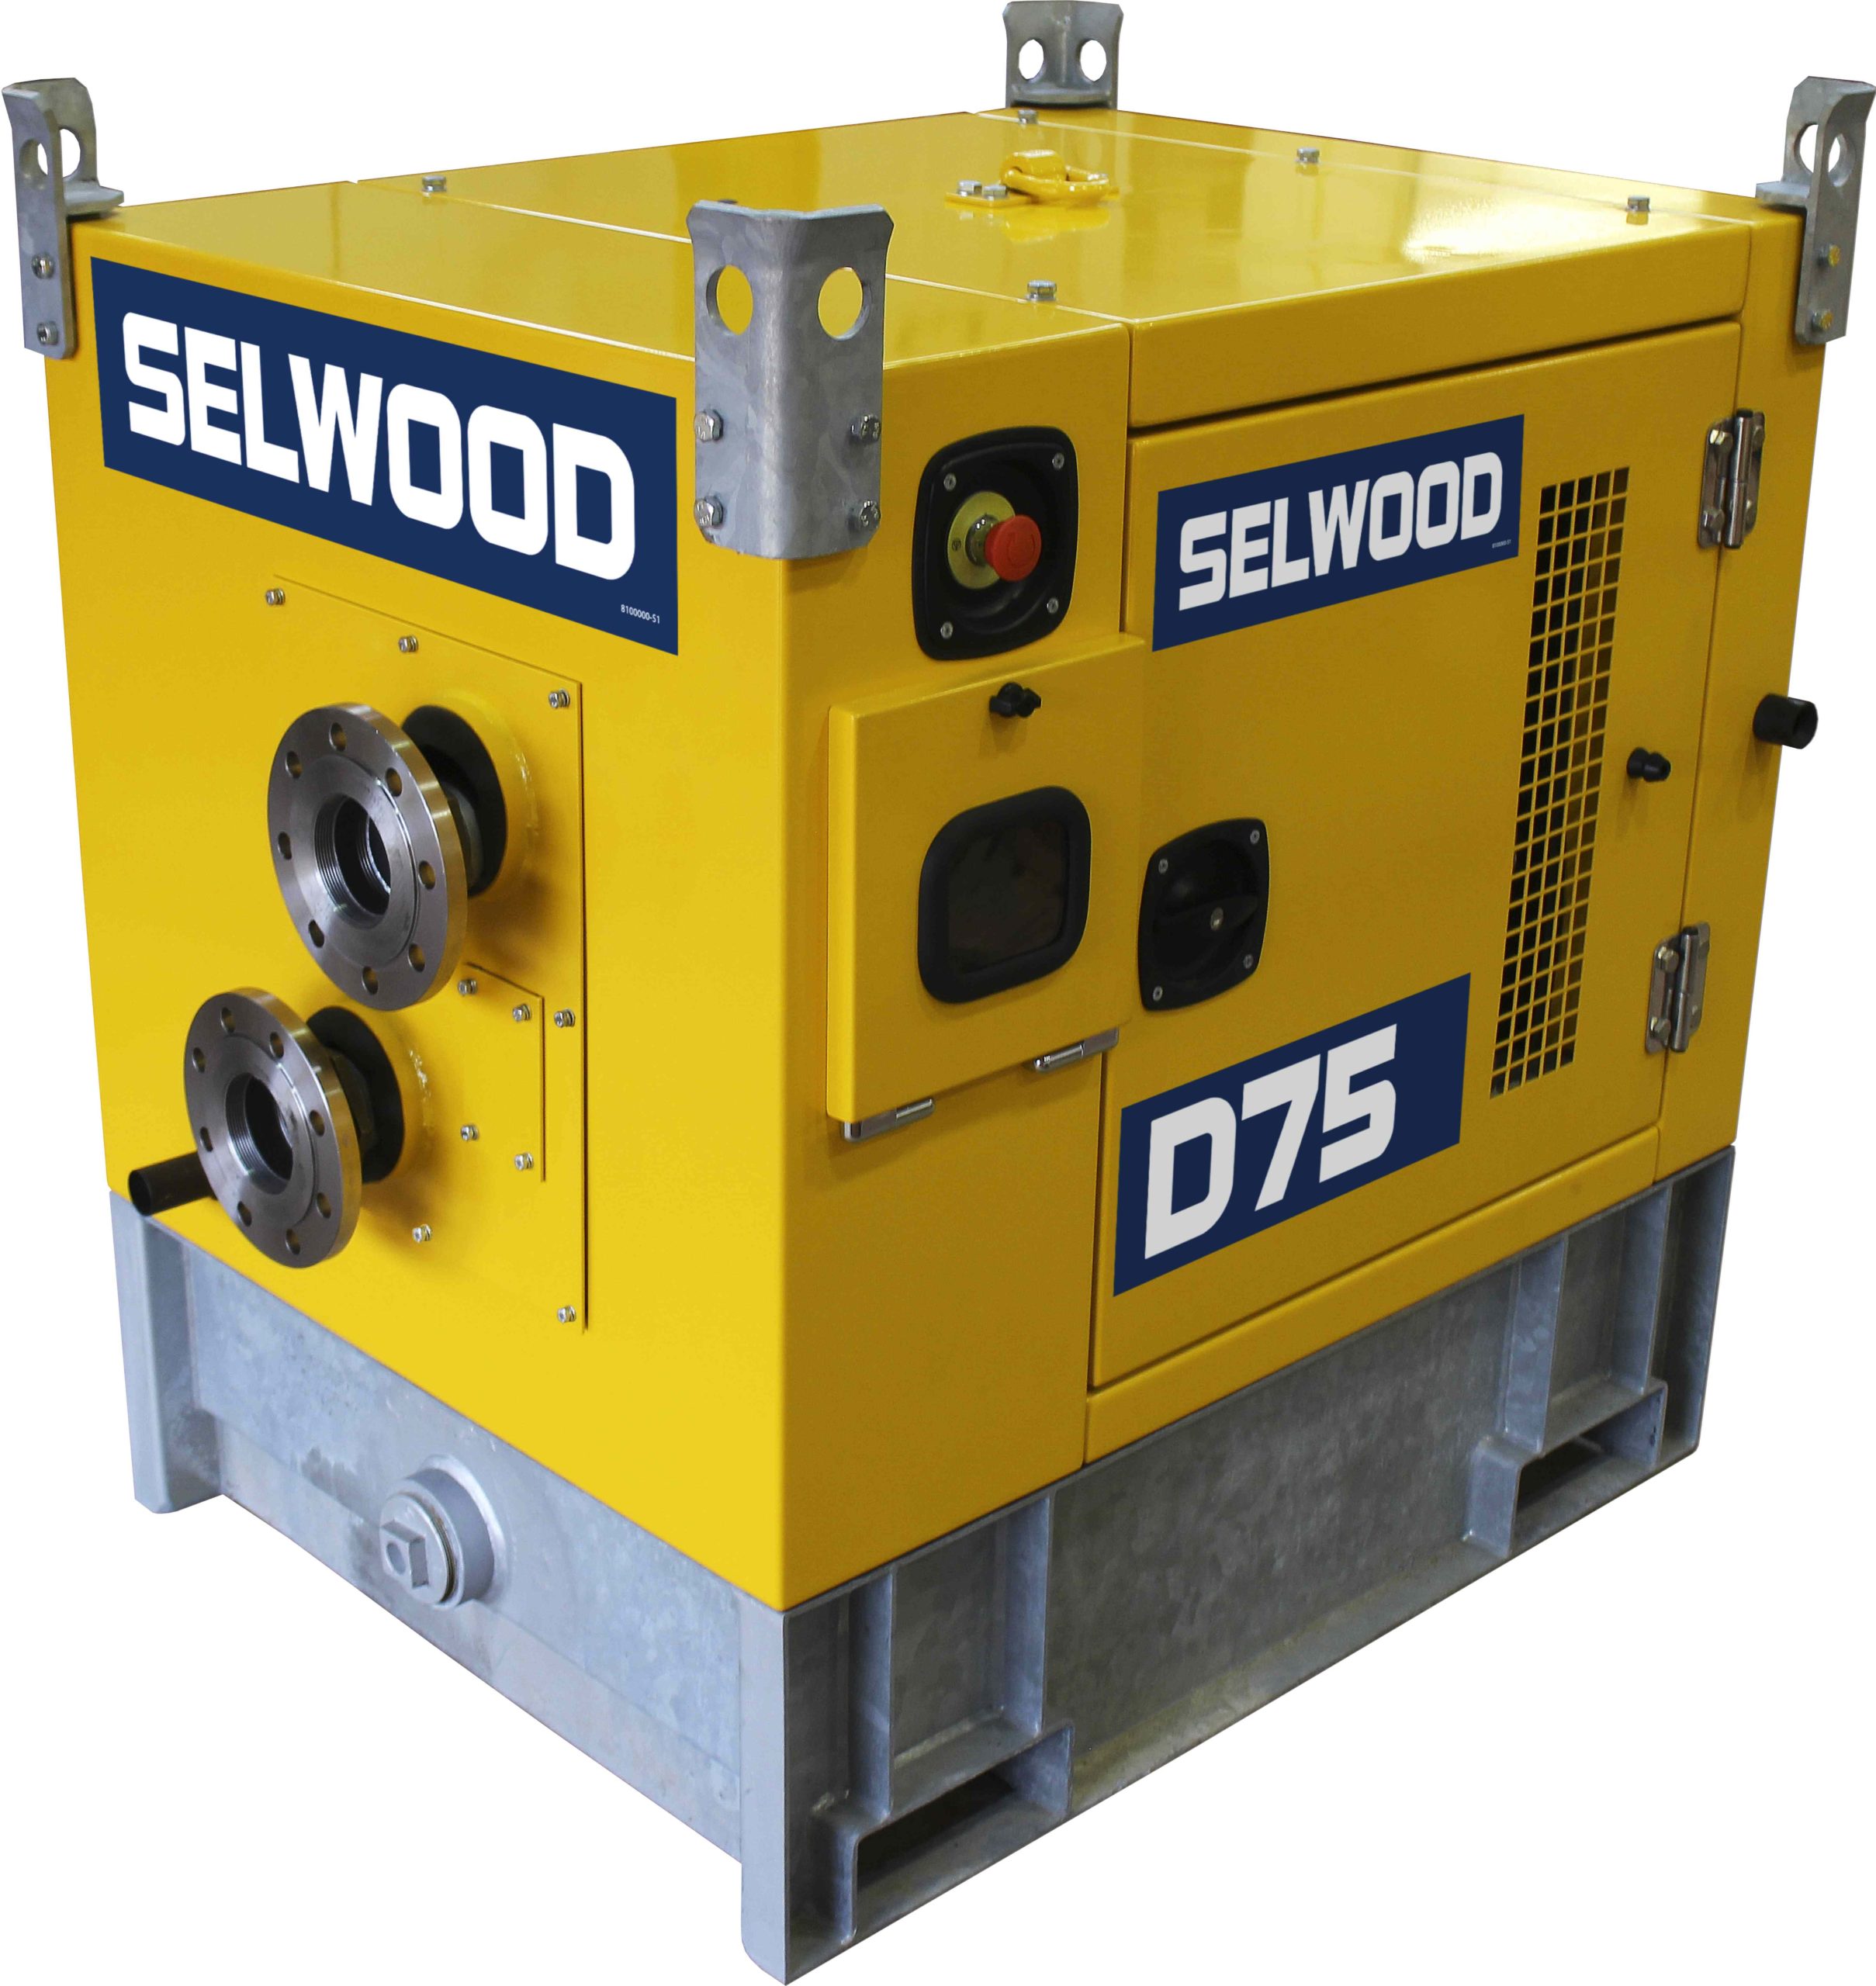 Selwood D75 pump